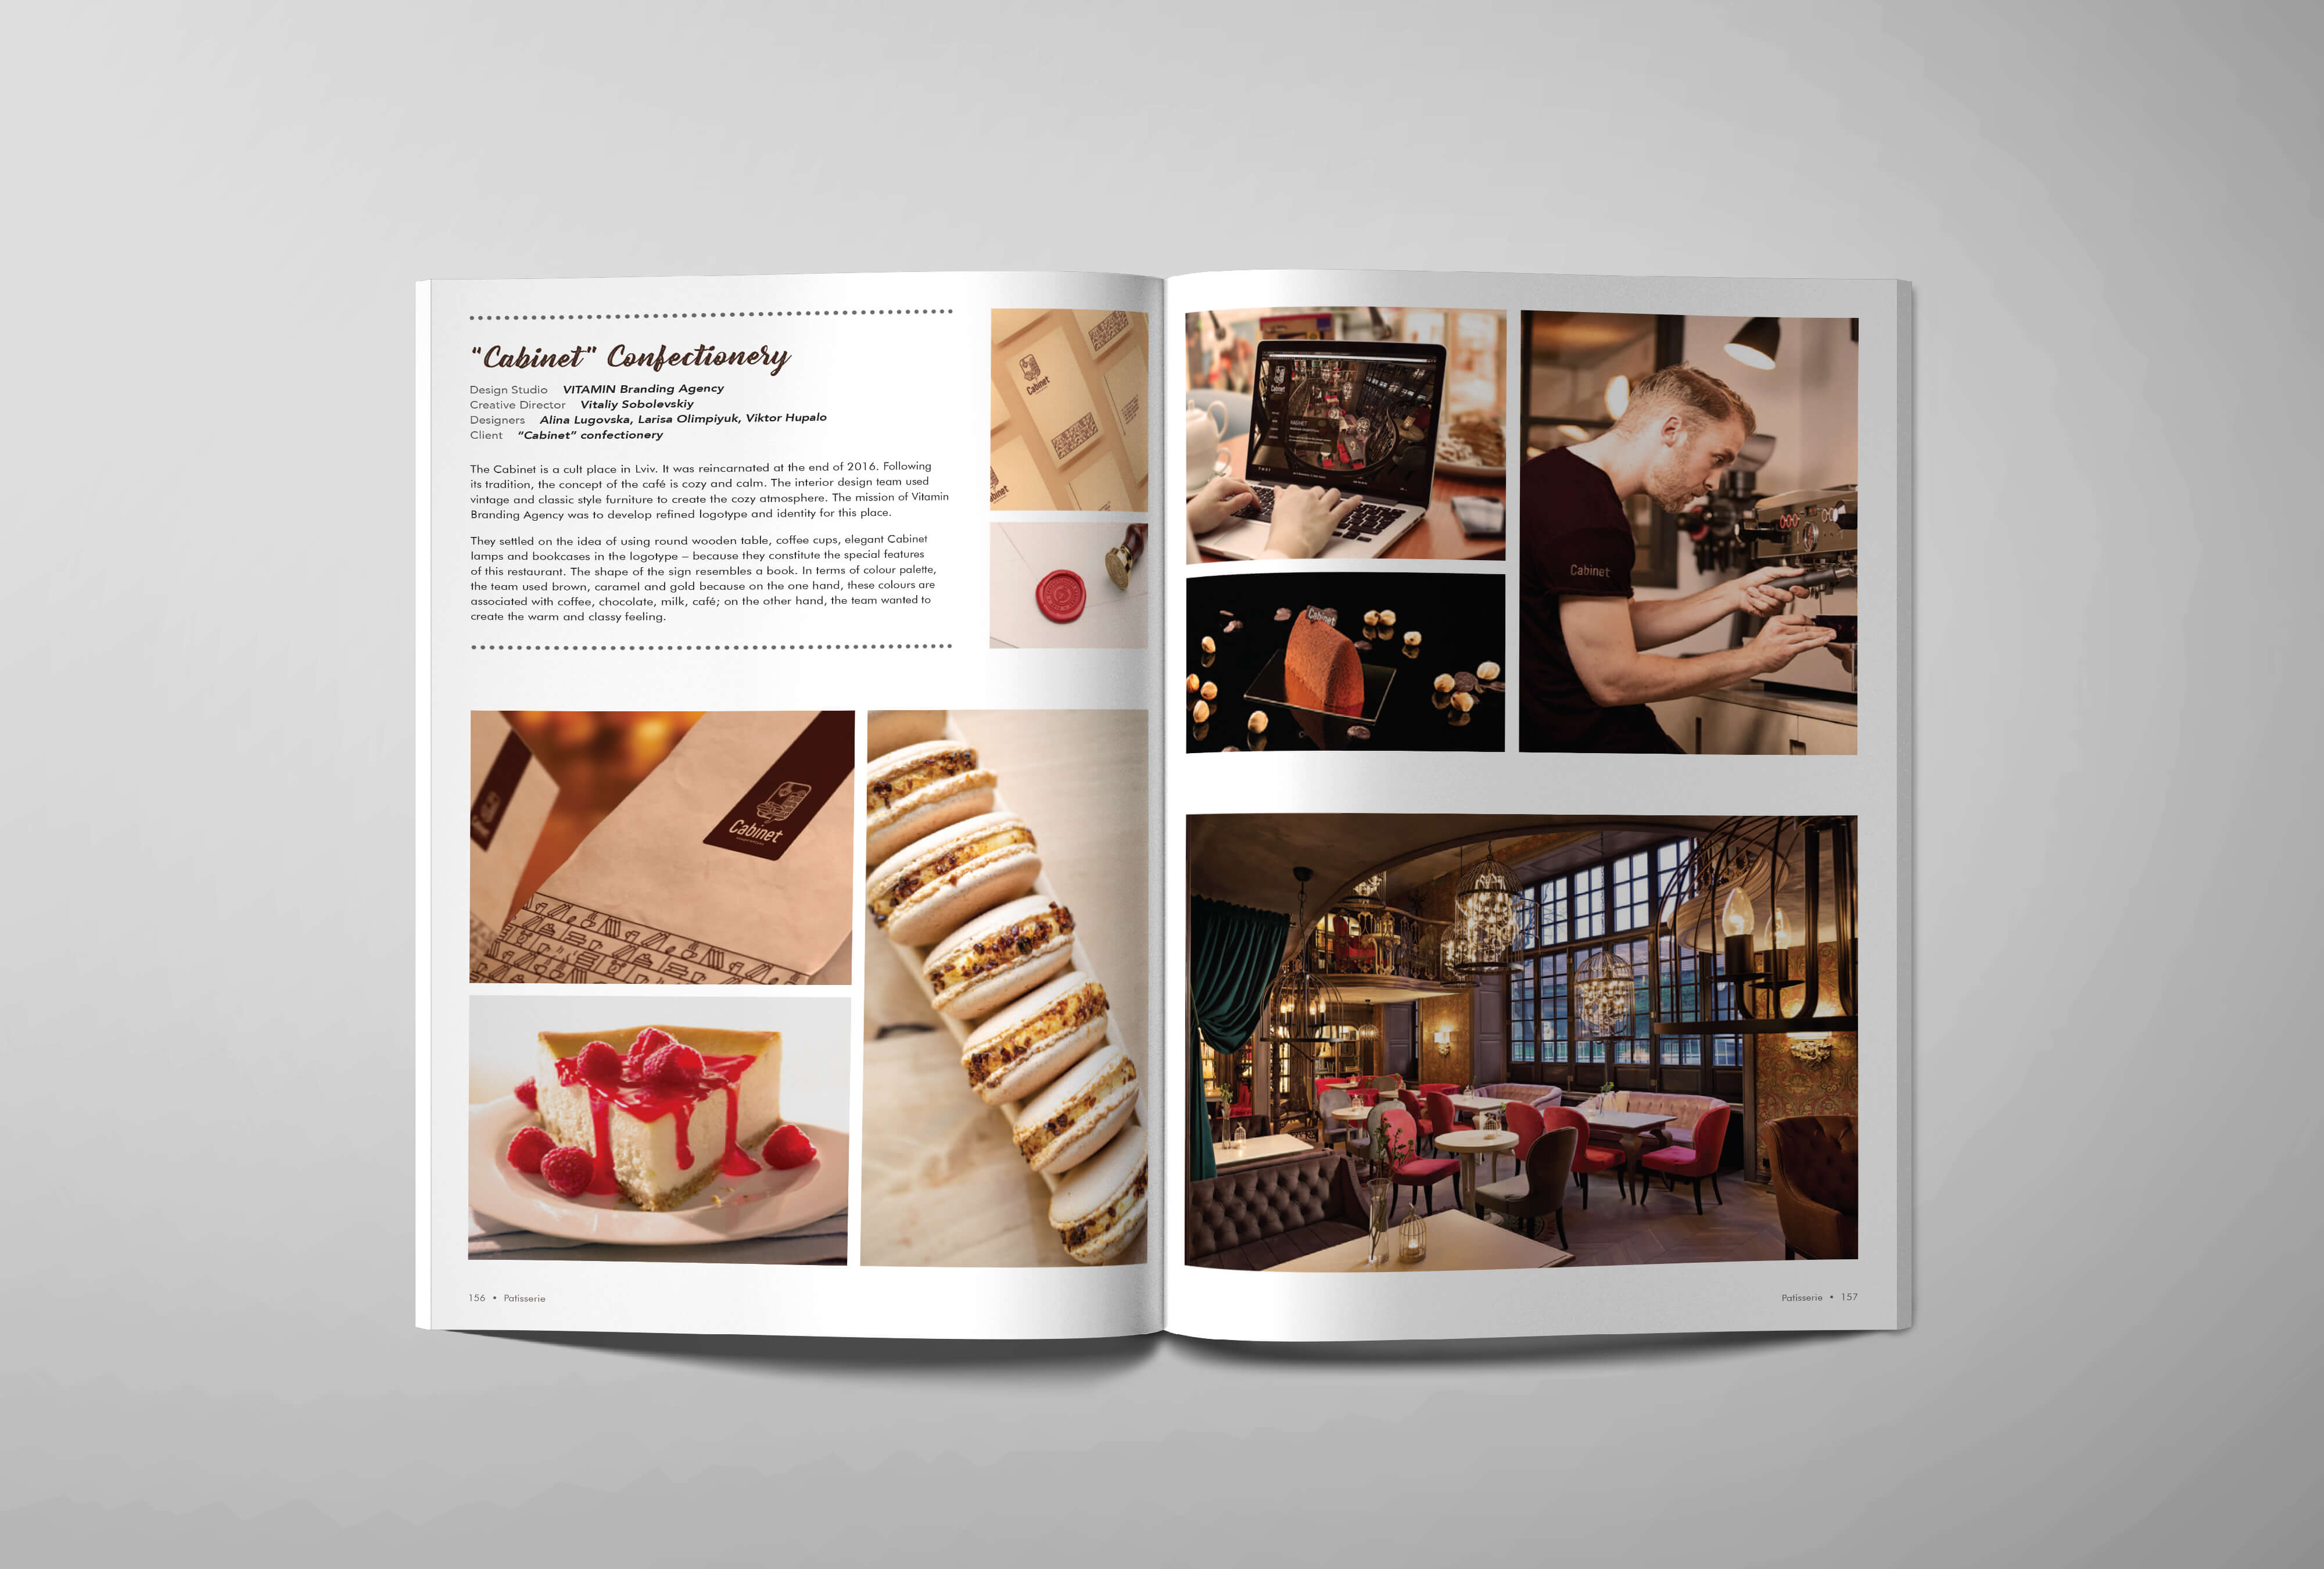 Delicious: смачна публікація VITAMIN у книзі про брендинг і дизайн